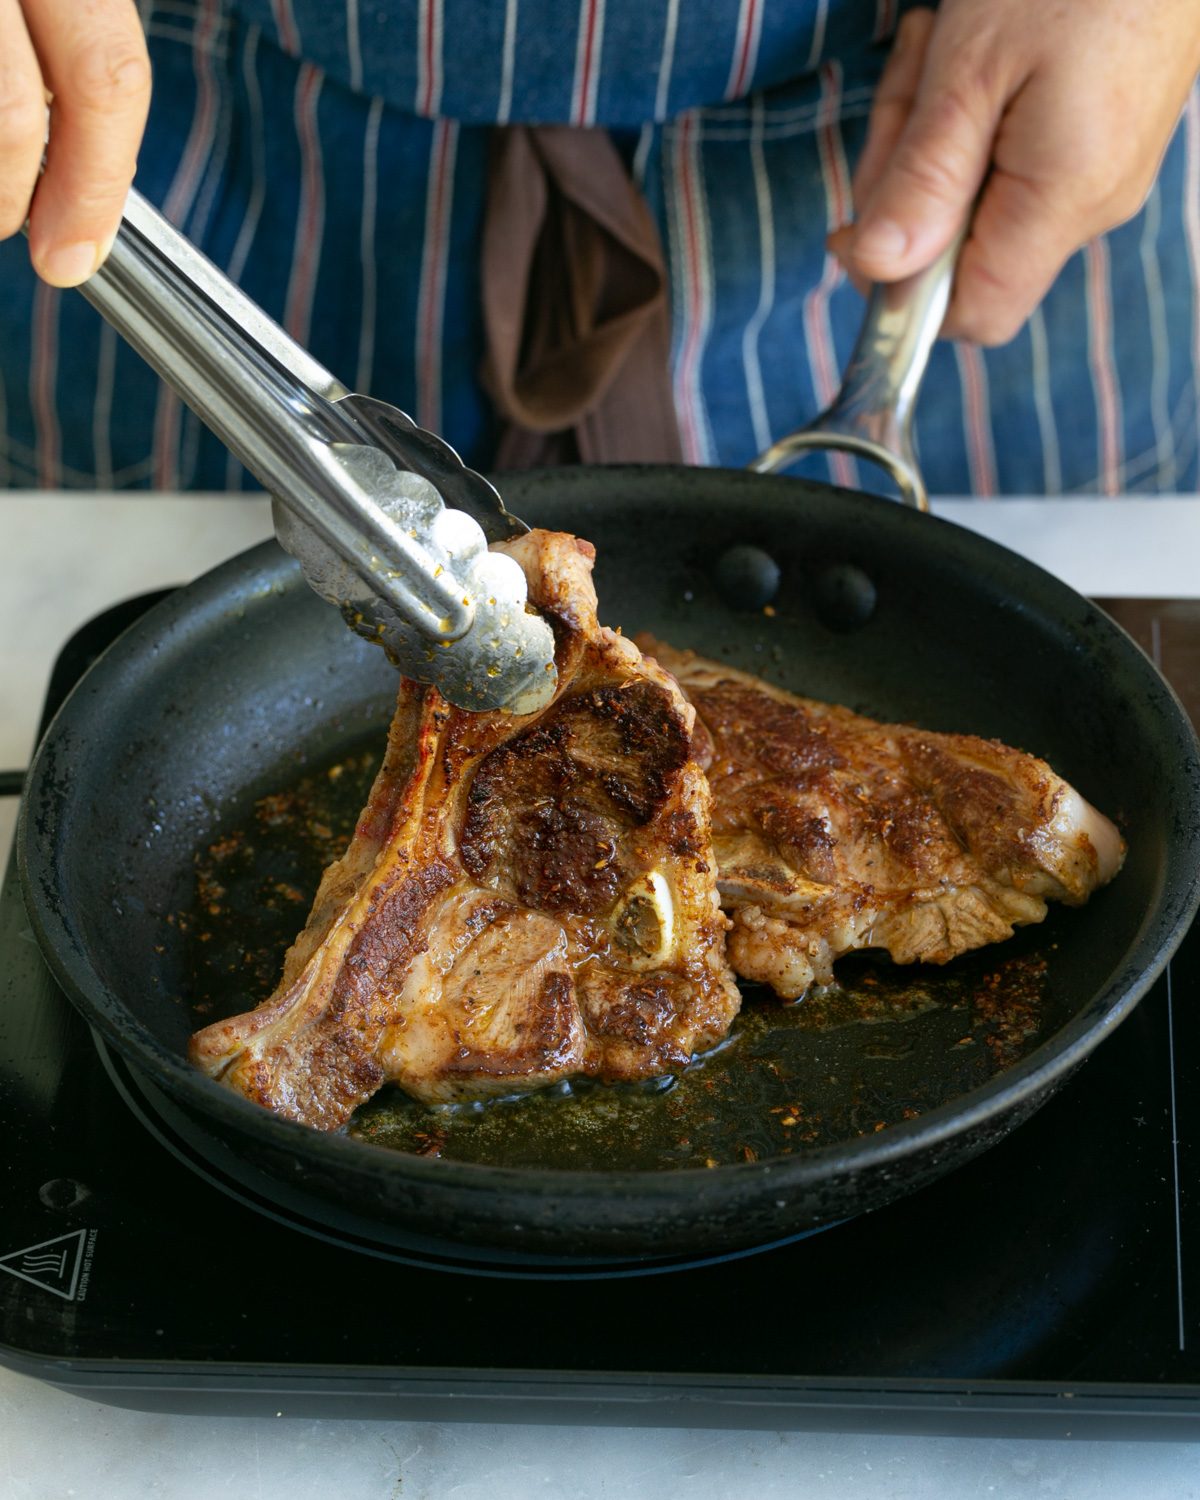 Cooking lamb chops in a pan